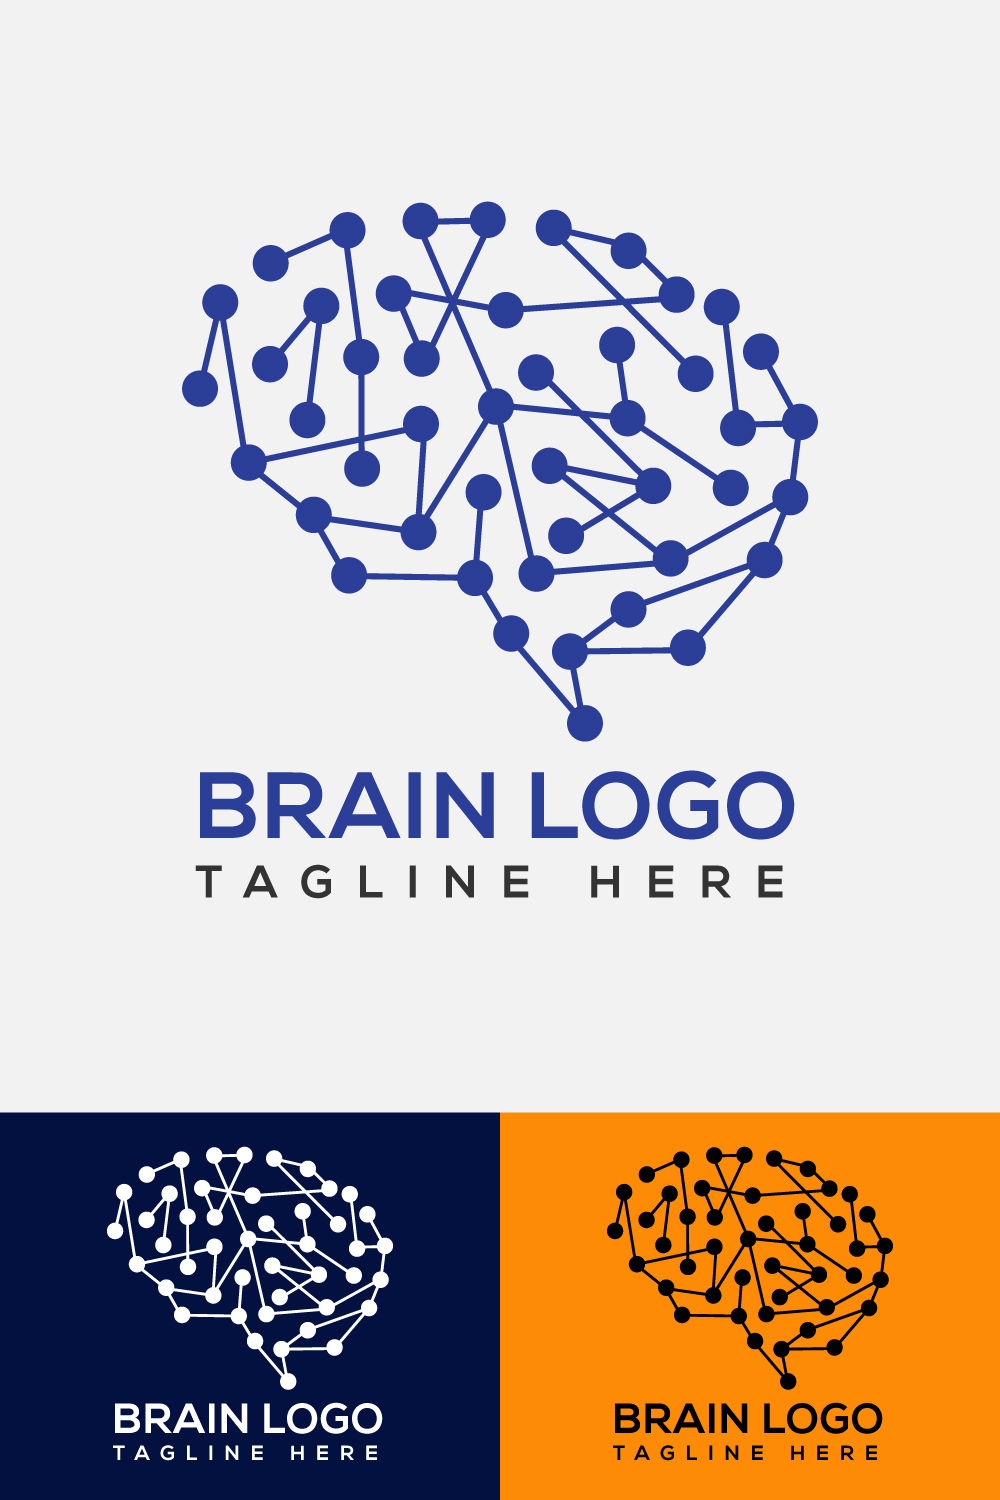 Brain Logo Vector Template Pinterest collage image.